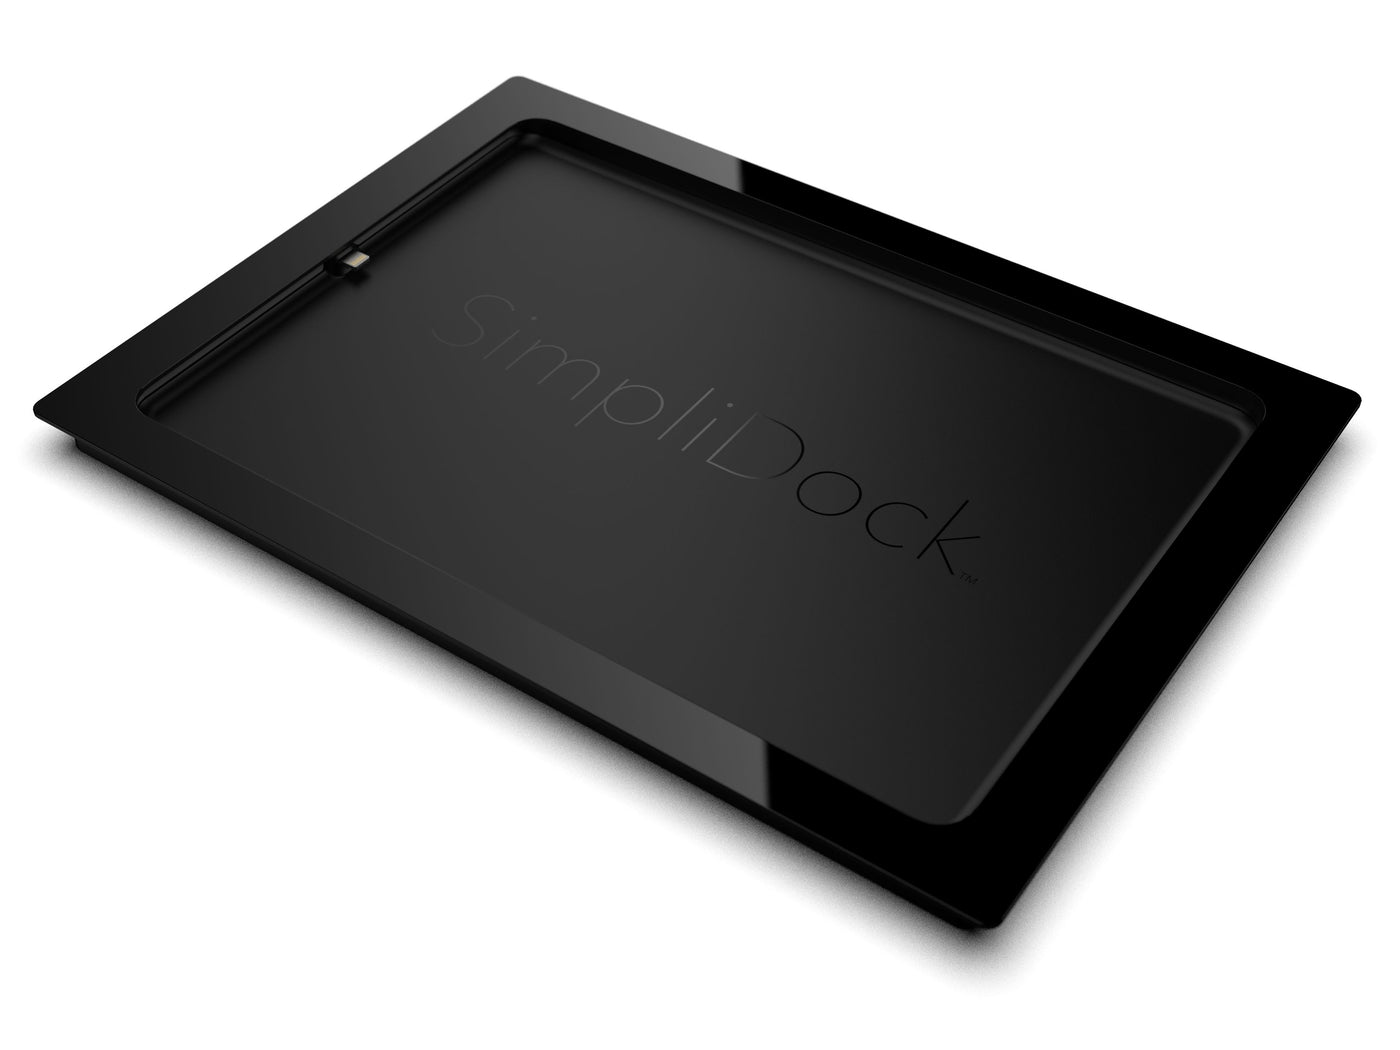 SimpliDock® for iPad® 7|8|9 10.2"|10.5"